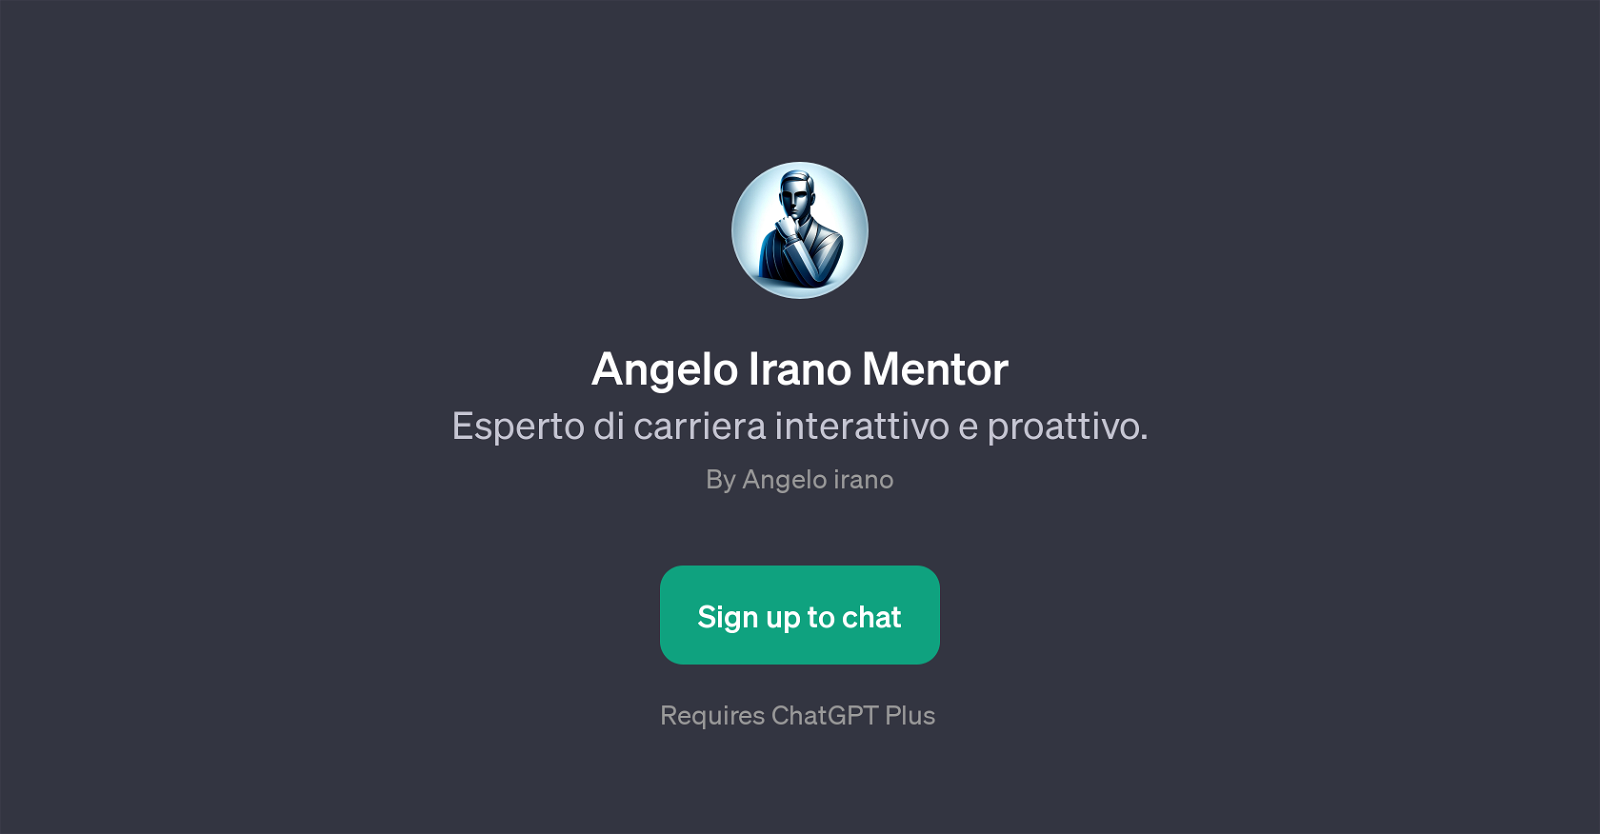 Angelo Irano Mentor website